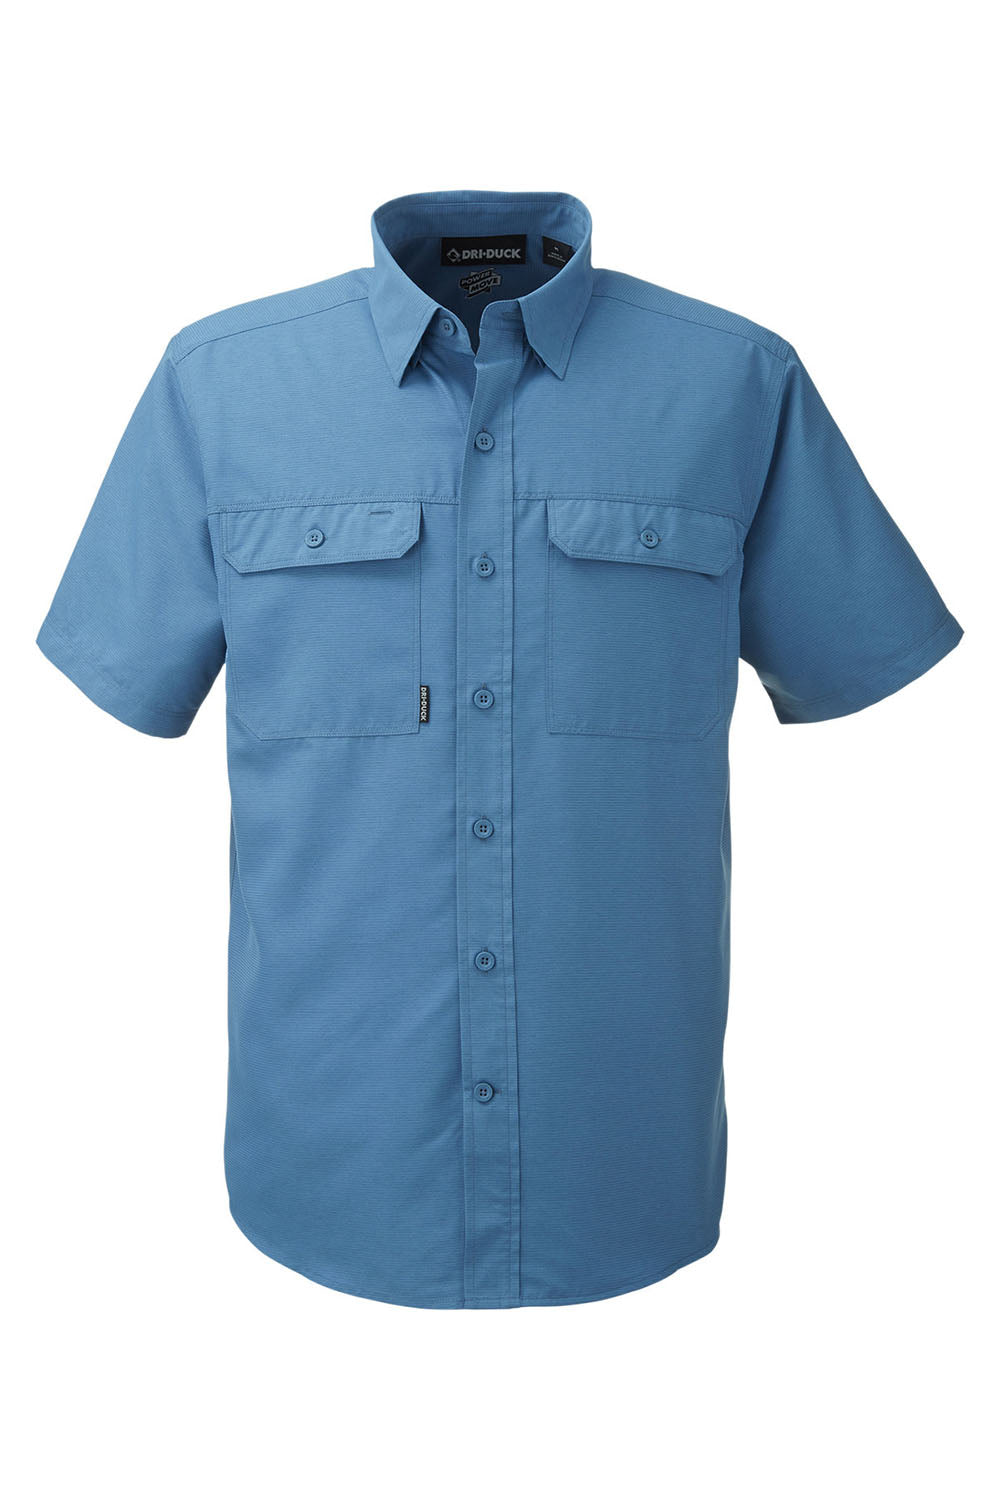 Dri Duck 4445DD Mens Crossroad Short Sleeve Button Down Shirt w/ Double Pockets Slate Blue Flat Front